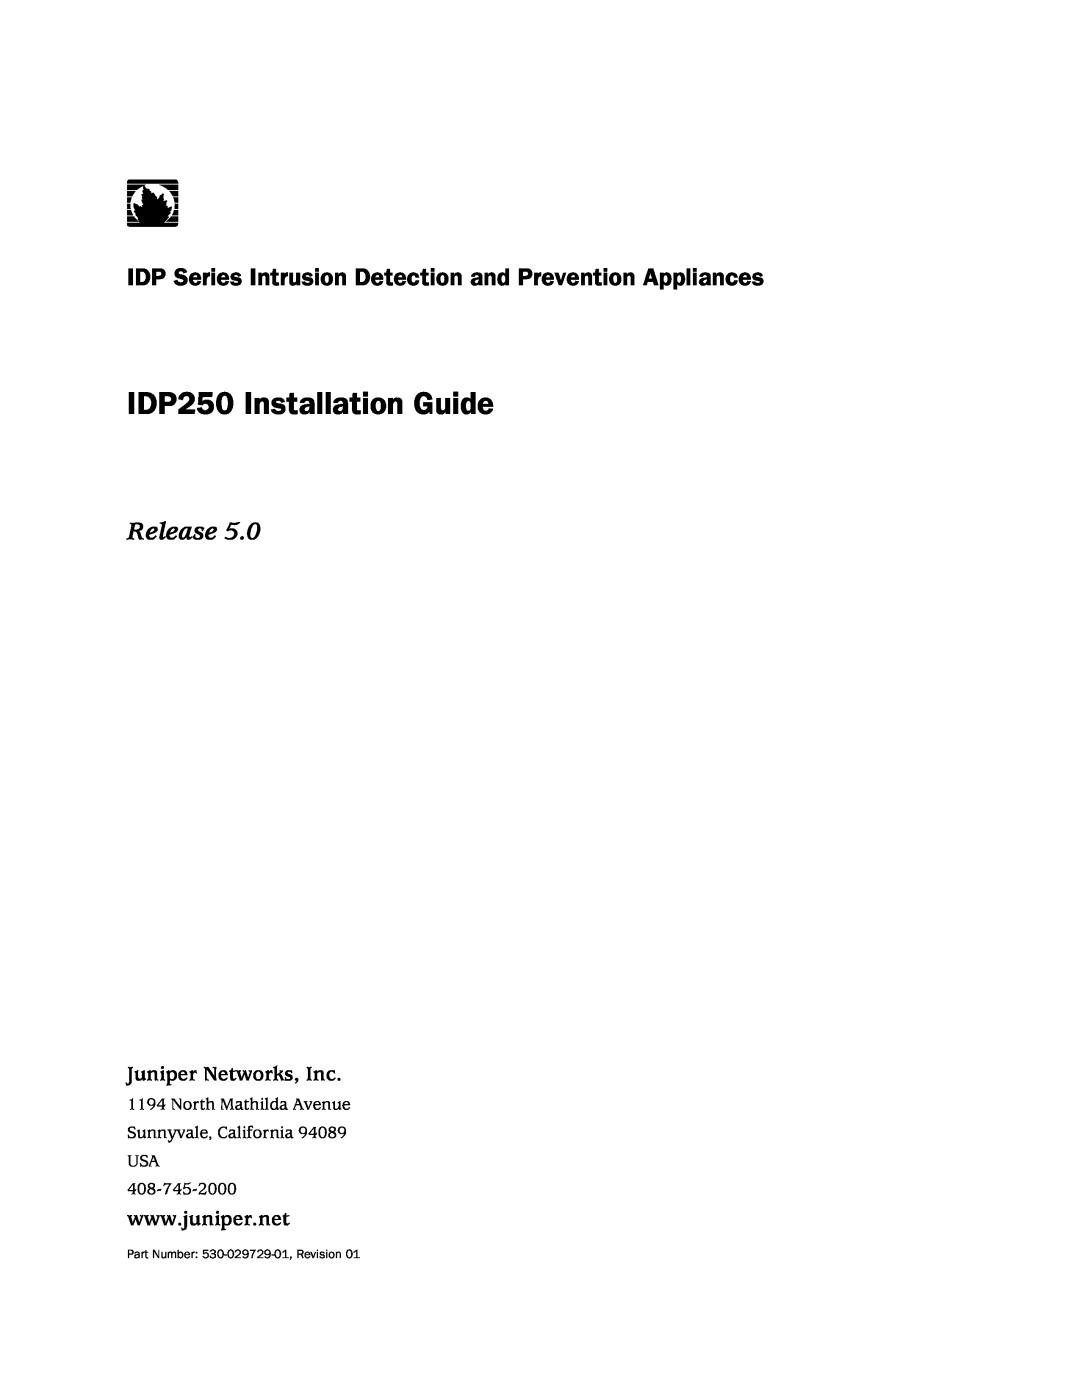 Juniper Networks manual IDP250 Installation Guide, Release, Juniper Networks, Inc, Part Number 530-029729-01,Revision 